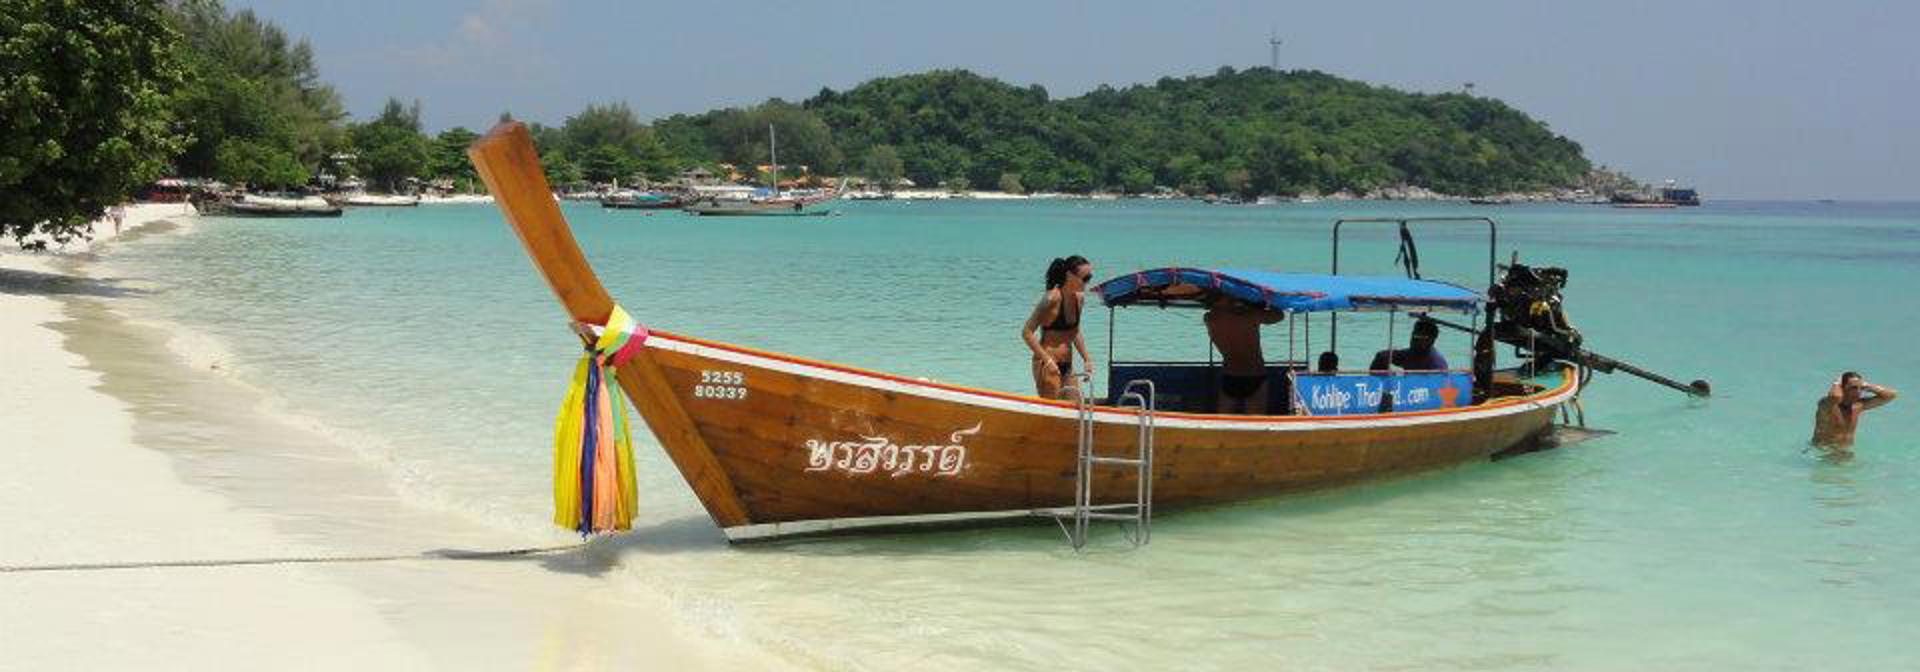 thailand - mali resort_strand_longtail_02